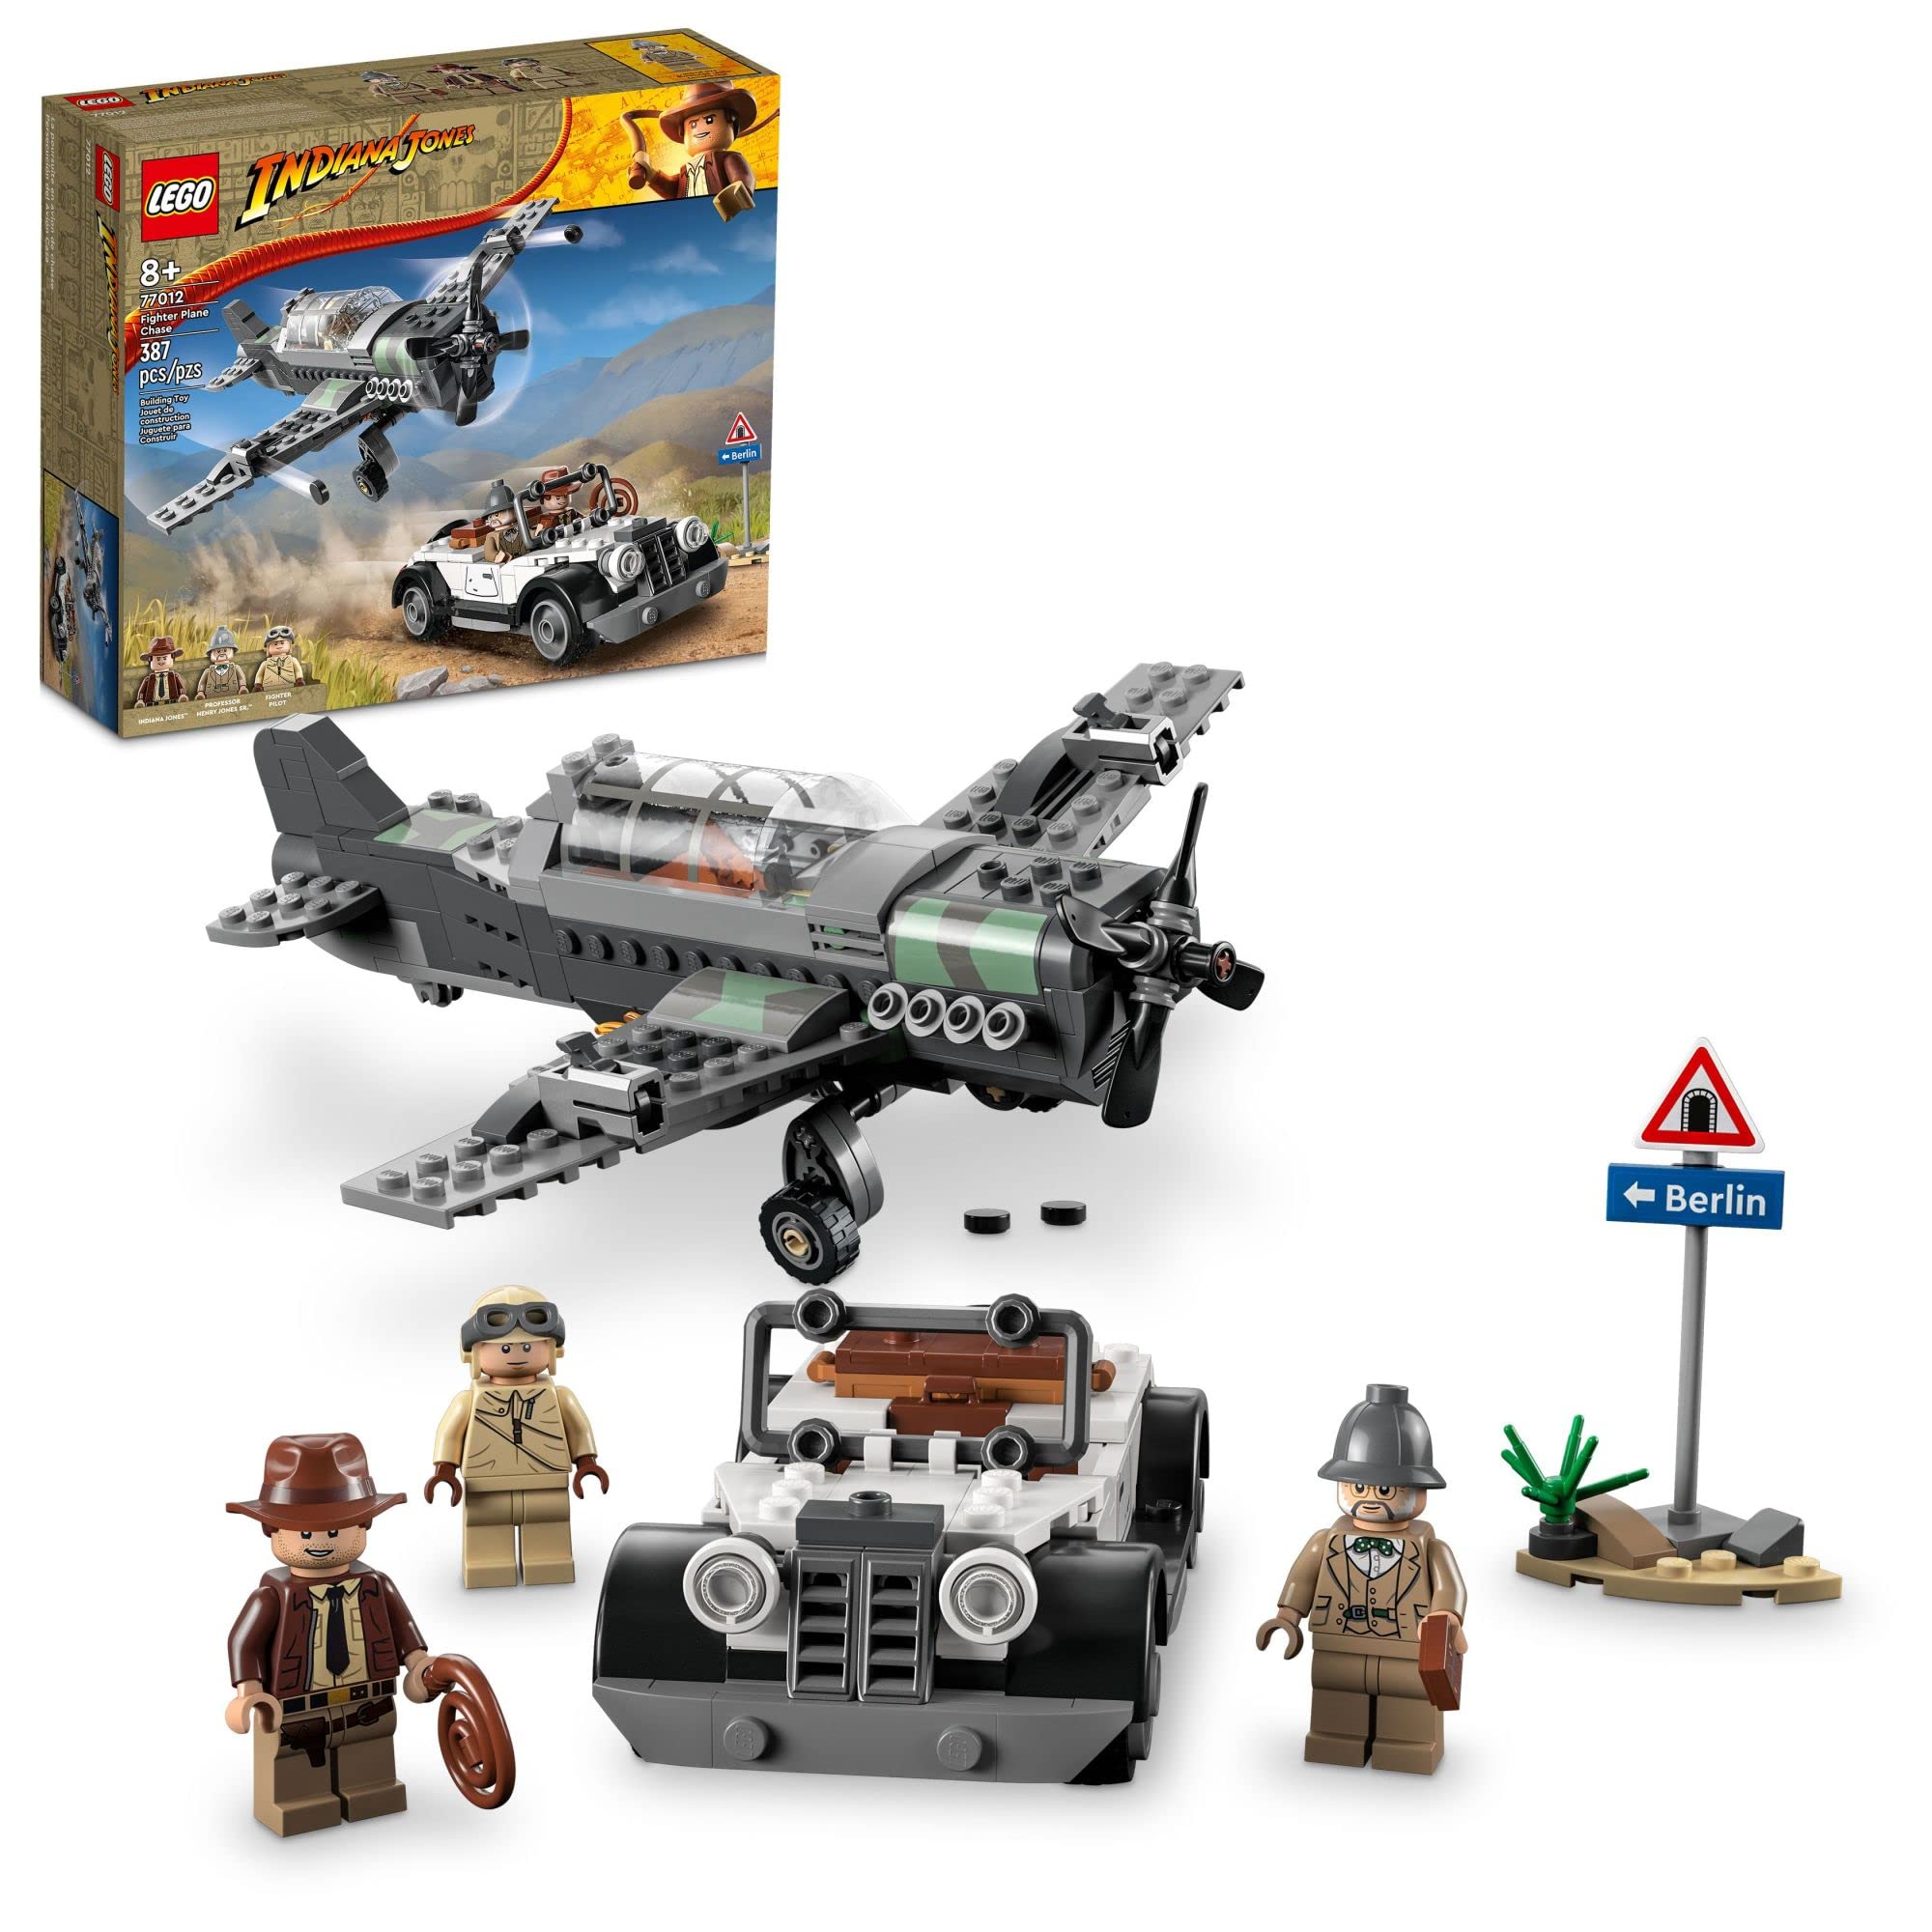 LEGO Indiana Jones Plane